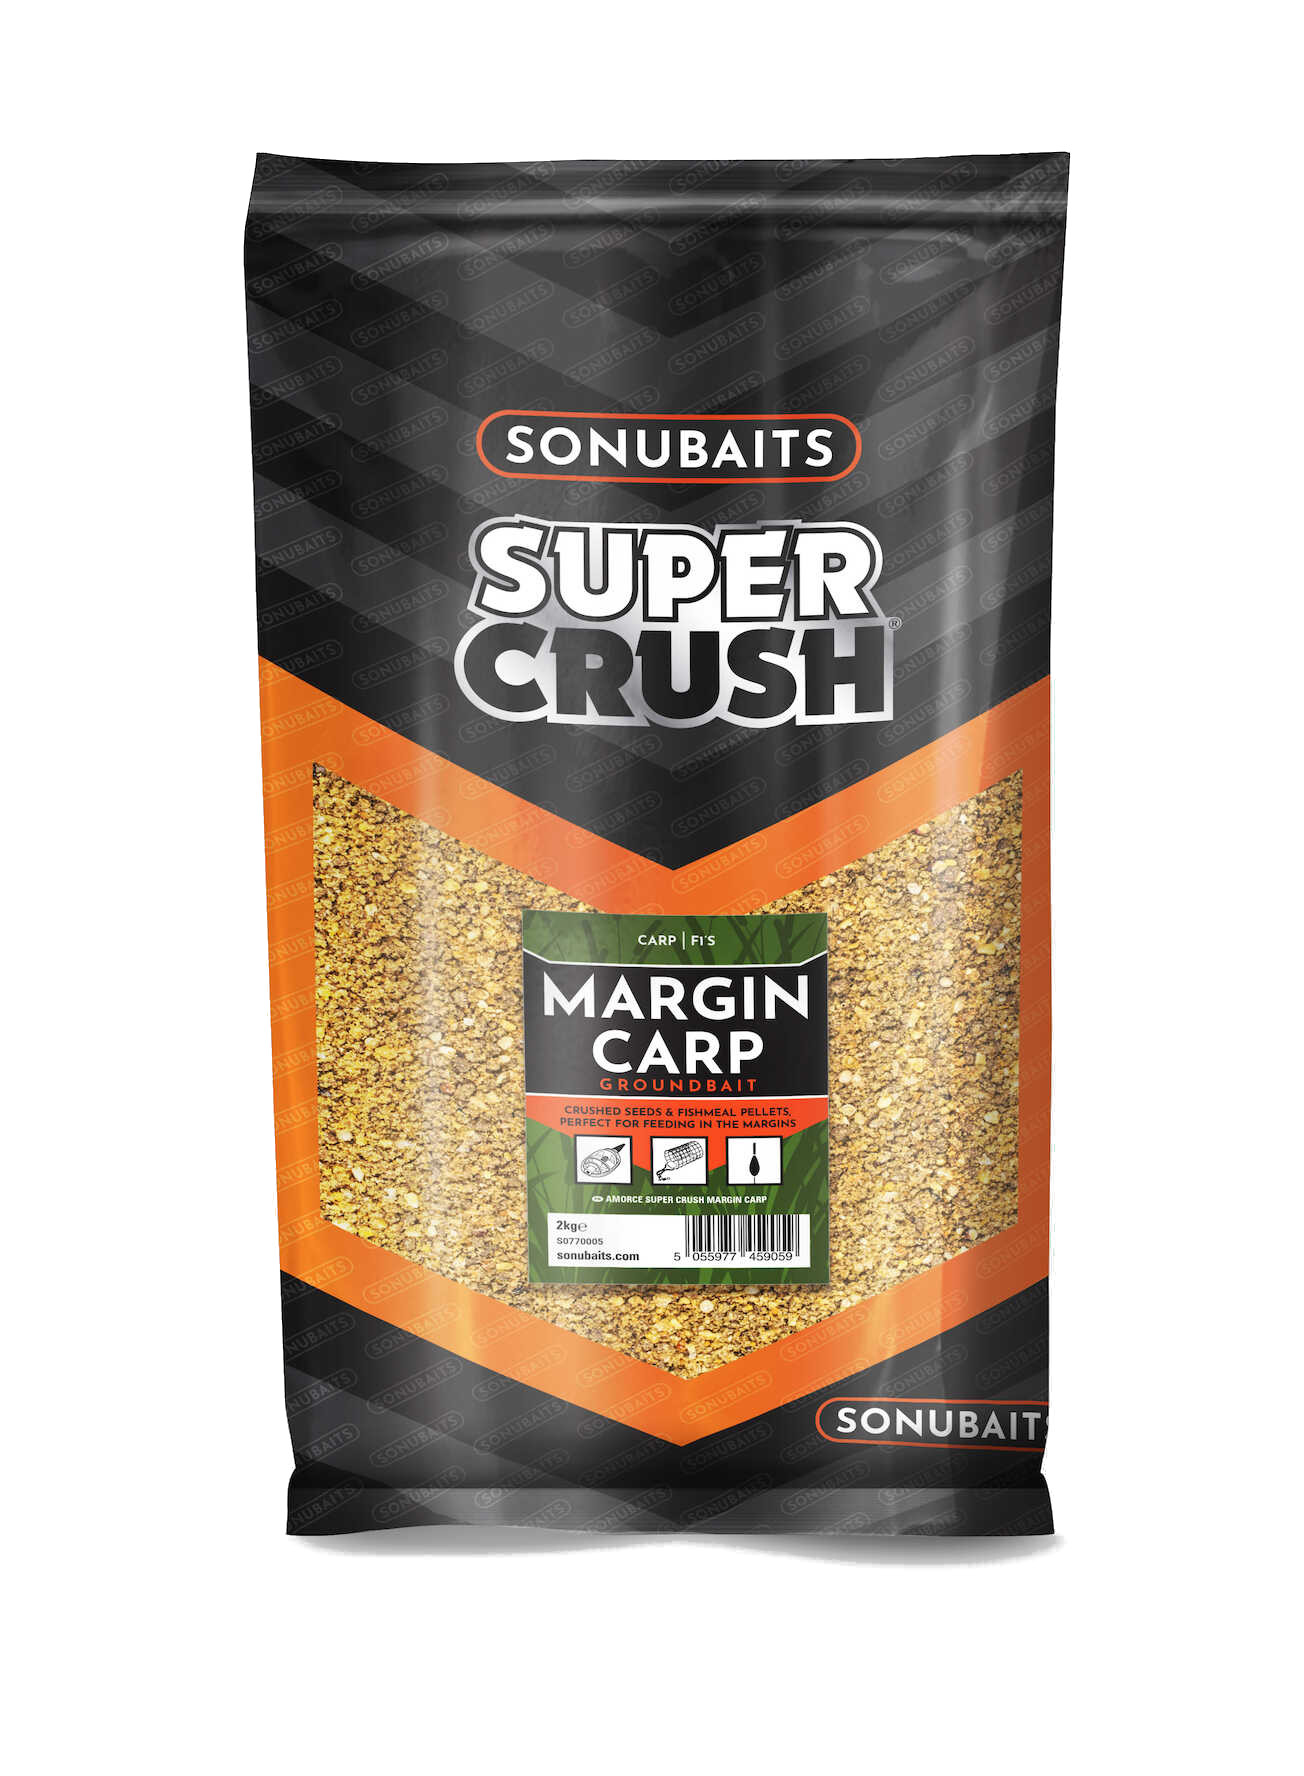 Sonubaits Supercrush Margin Carp Groundbait (2kg)